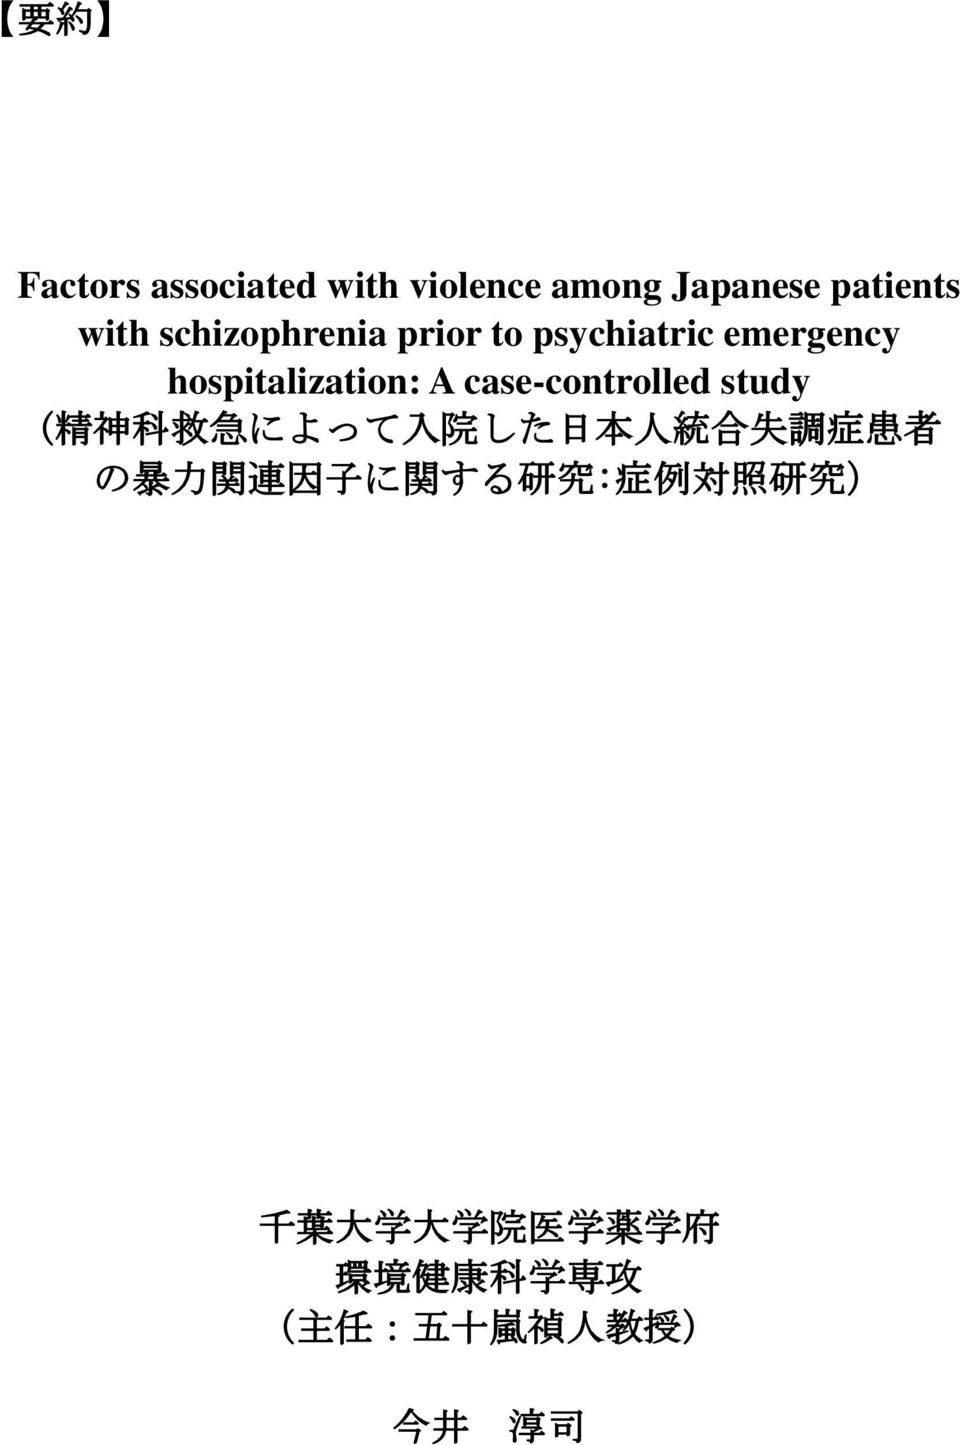 case-controlled study ( 精 神 科 救 急 によって 入 院 した 日 本 人 統 合 失 調 症 患 者 の 暴 力 関 連